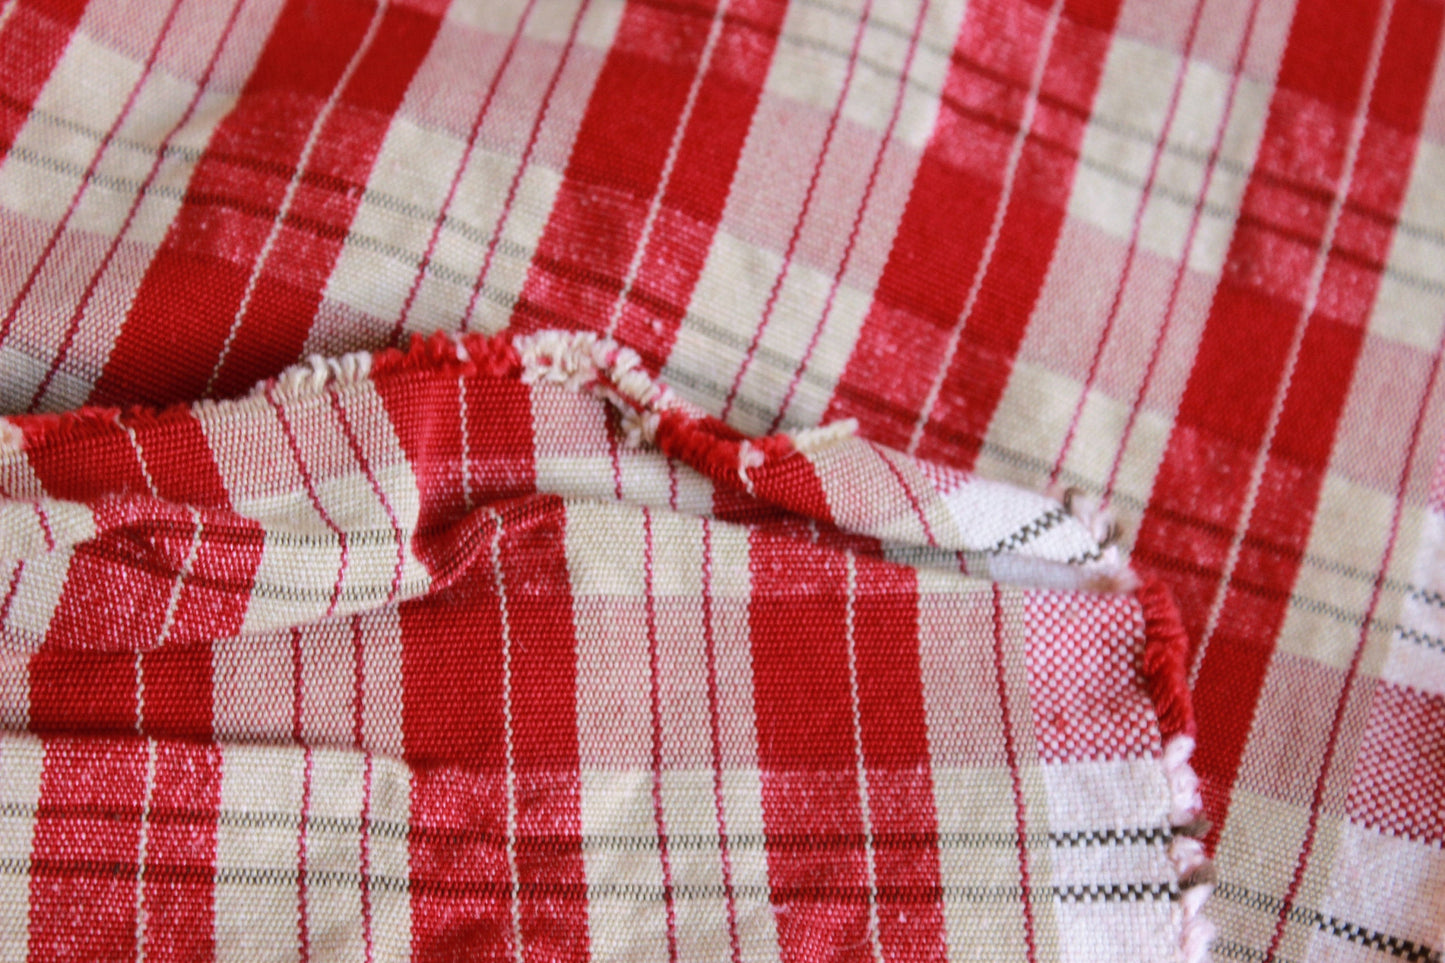 Vintage 1940s Red Tartan Plaid Fabric